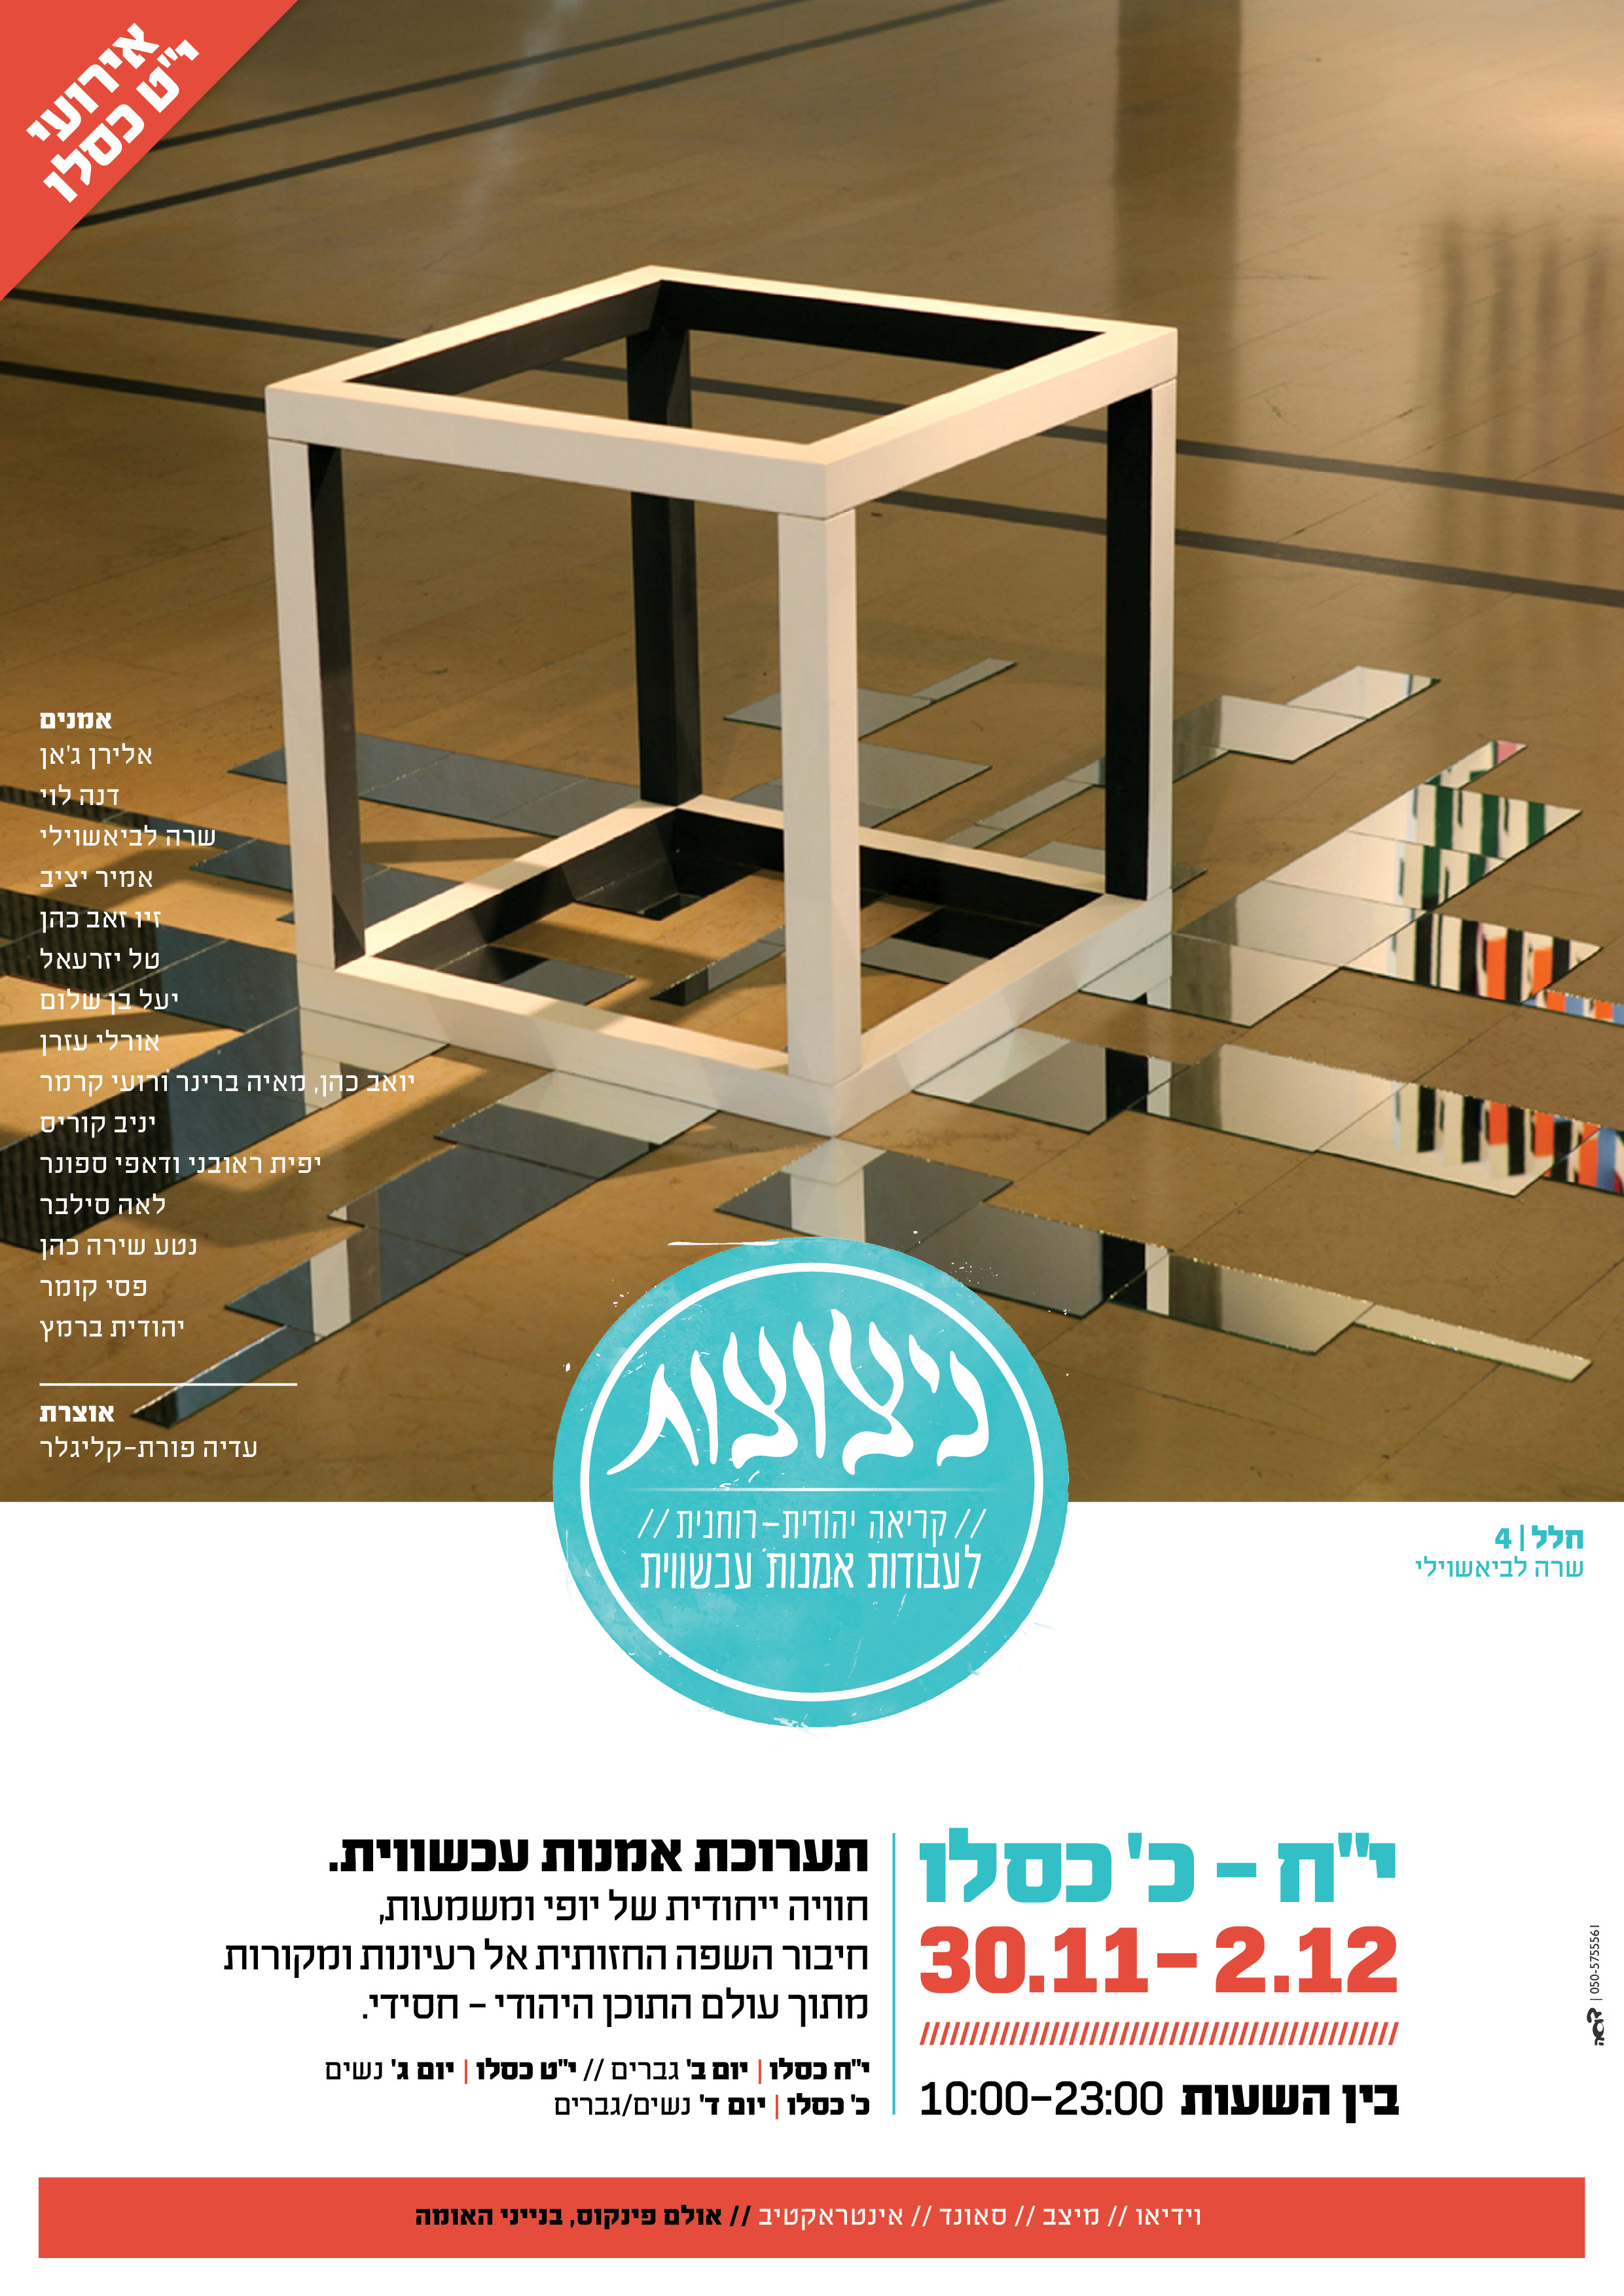 Nitzozot- Exhibit during the international Hassidic Conference in Jerusalem